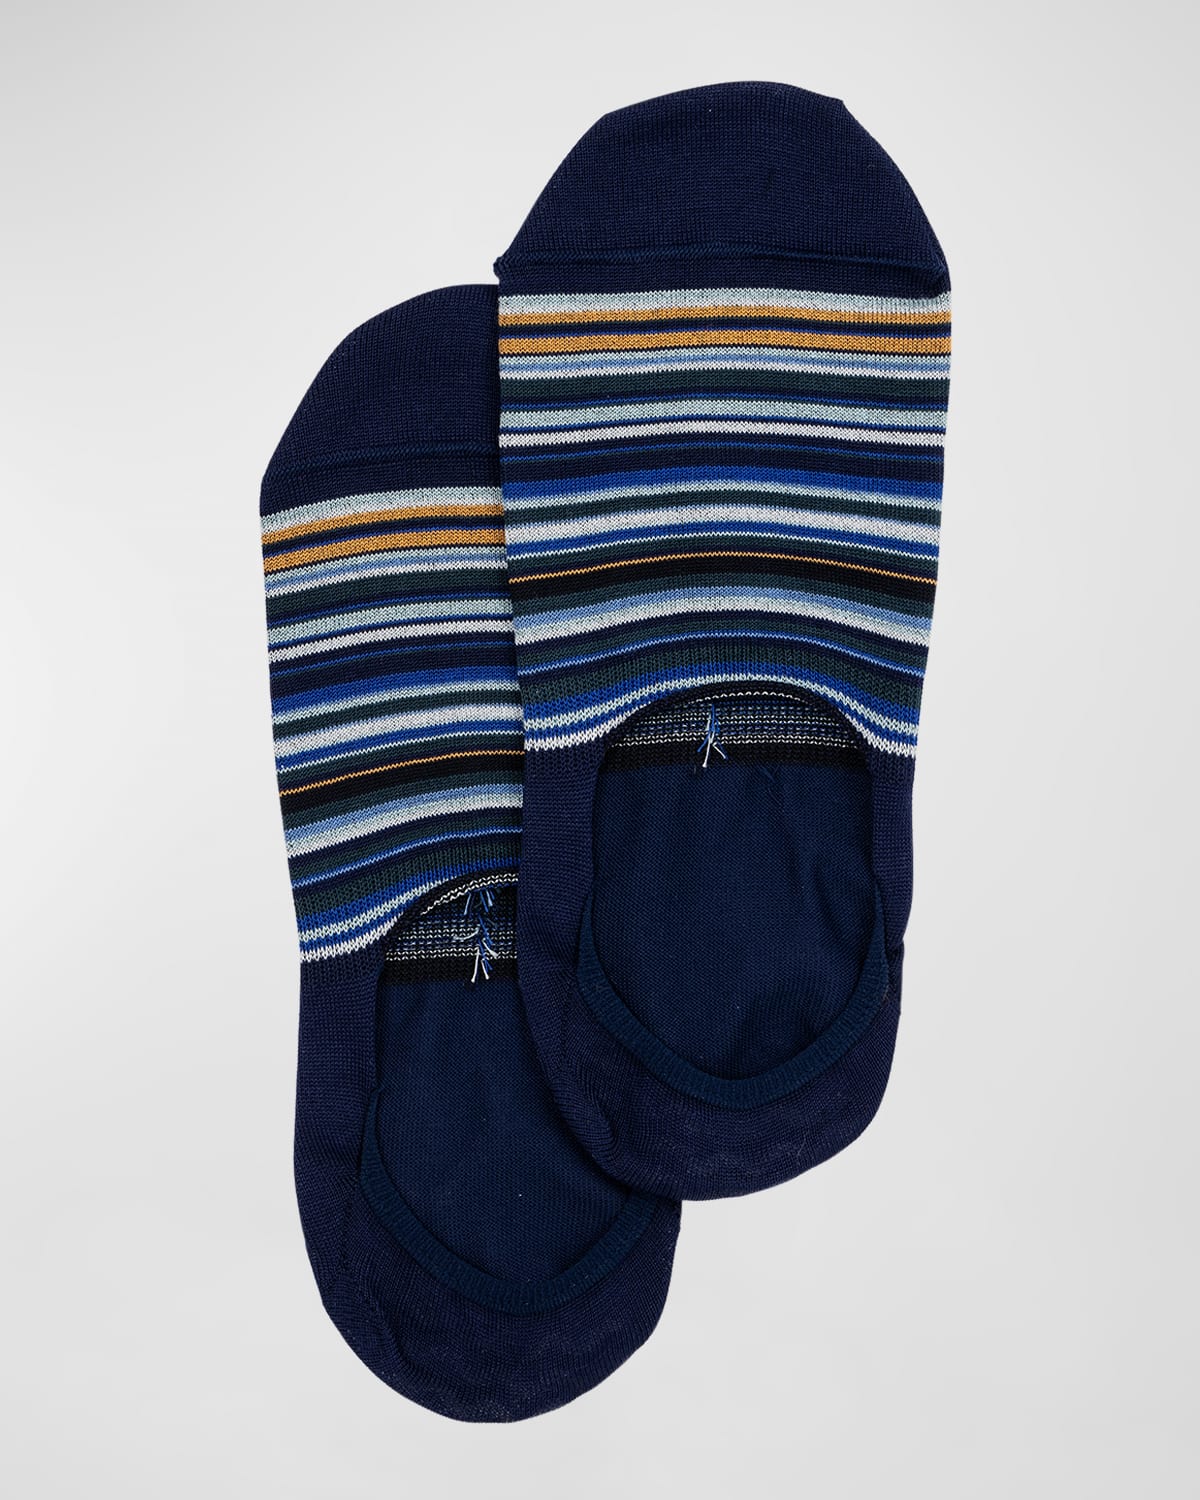 Paul Smith Men's No-show Socks With Grips In Dark Blue